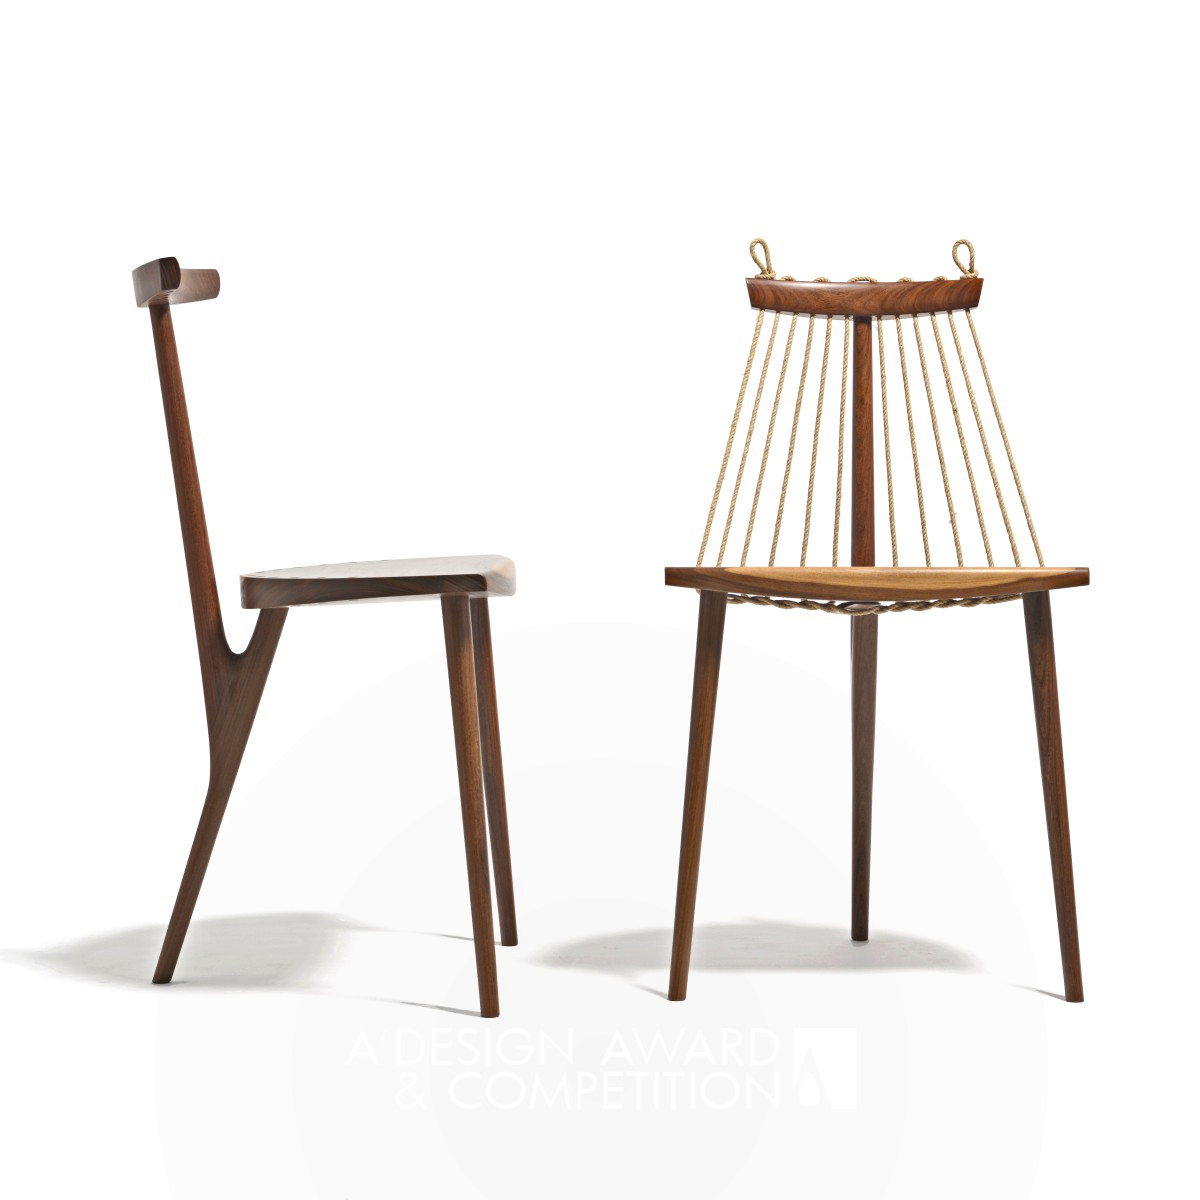 Three Legged chair by Ricardo Graham Ferreira